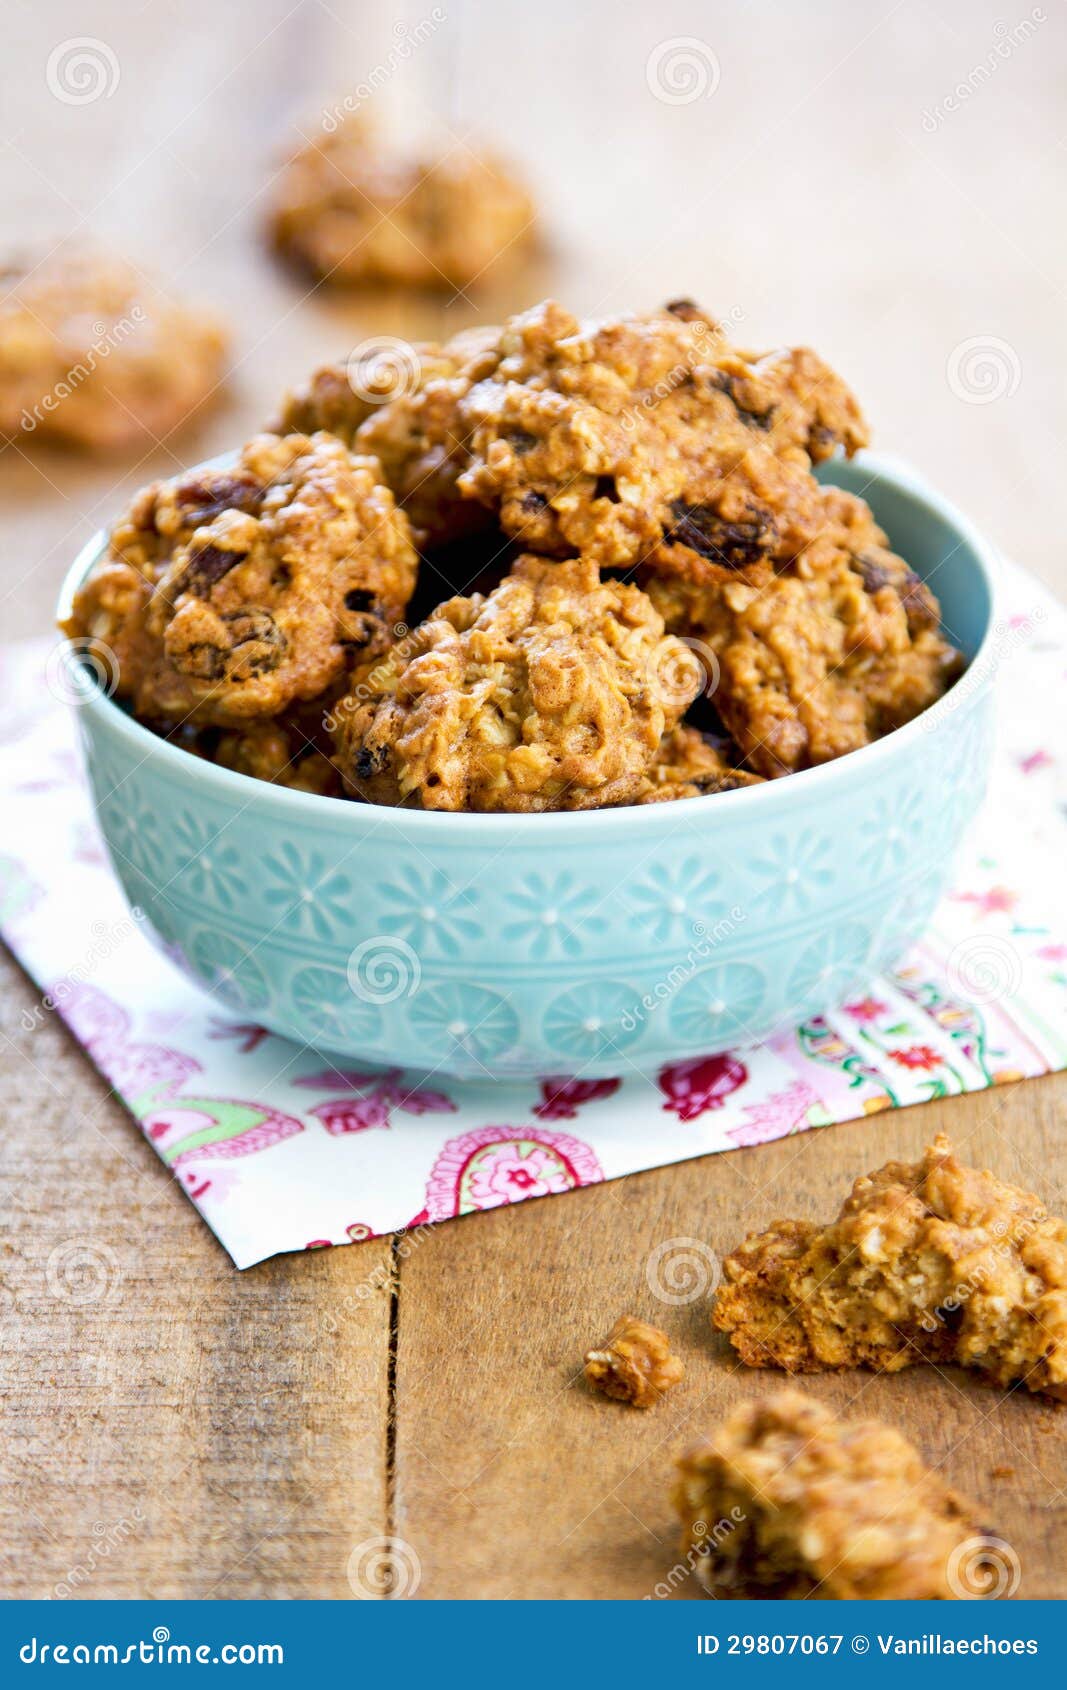 oatmeal and raisin cookies